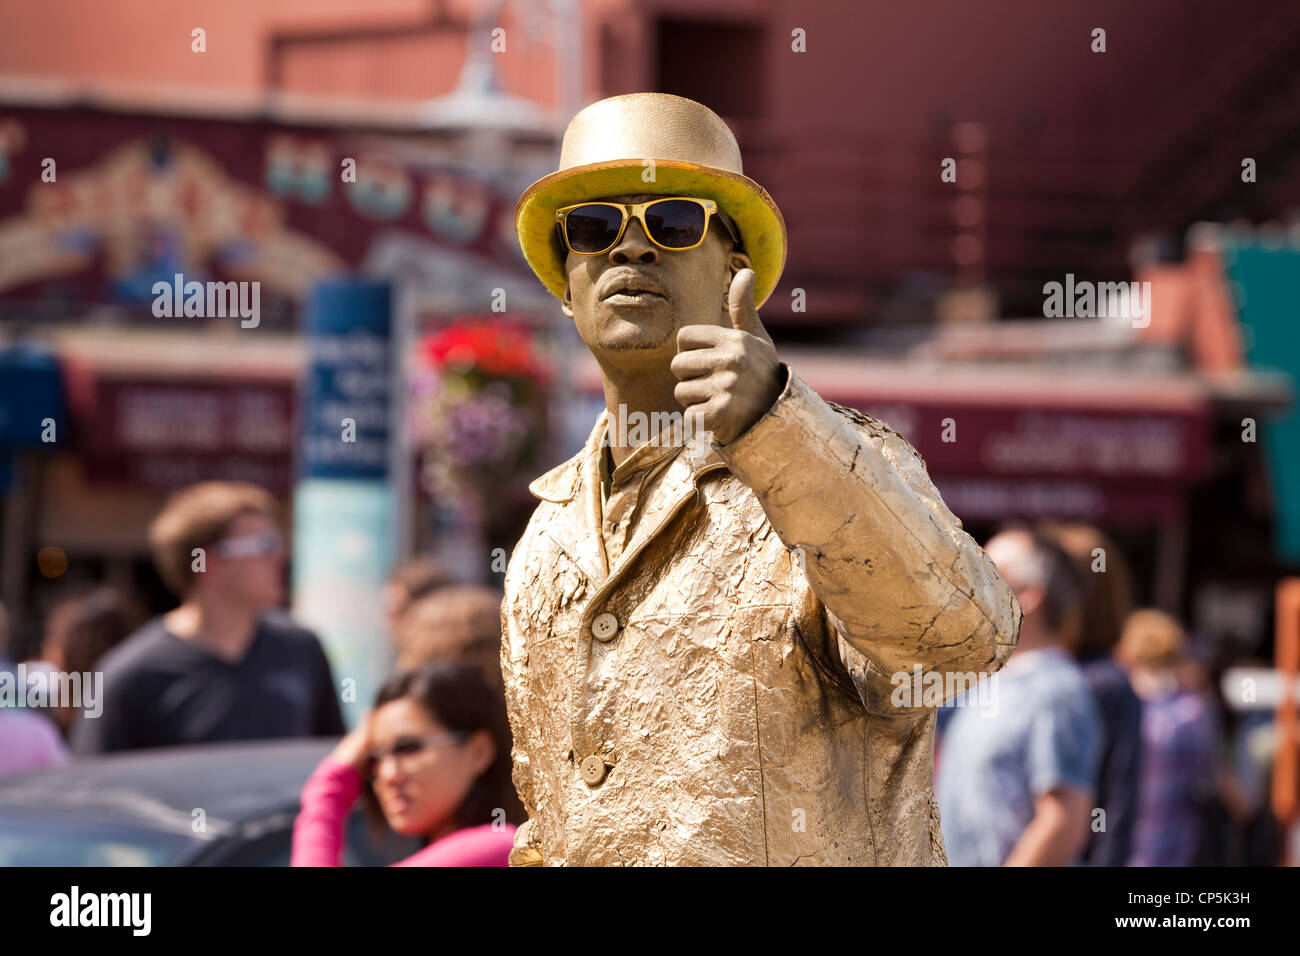 Gold man street performer on busy street - San Francisco, California USA Stock Photo